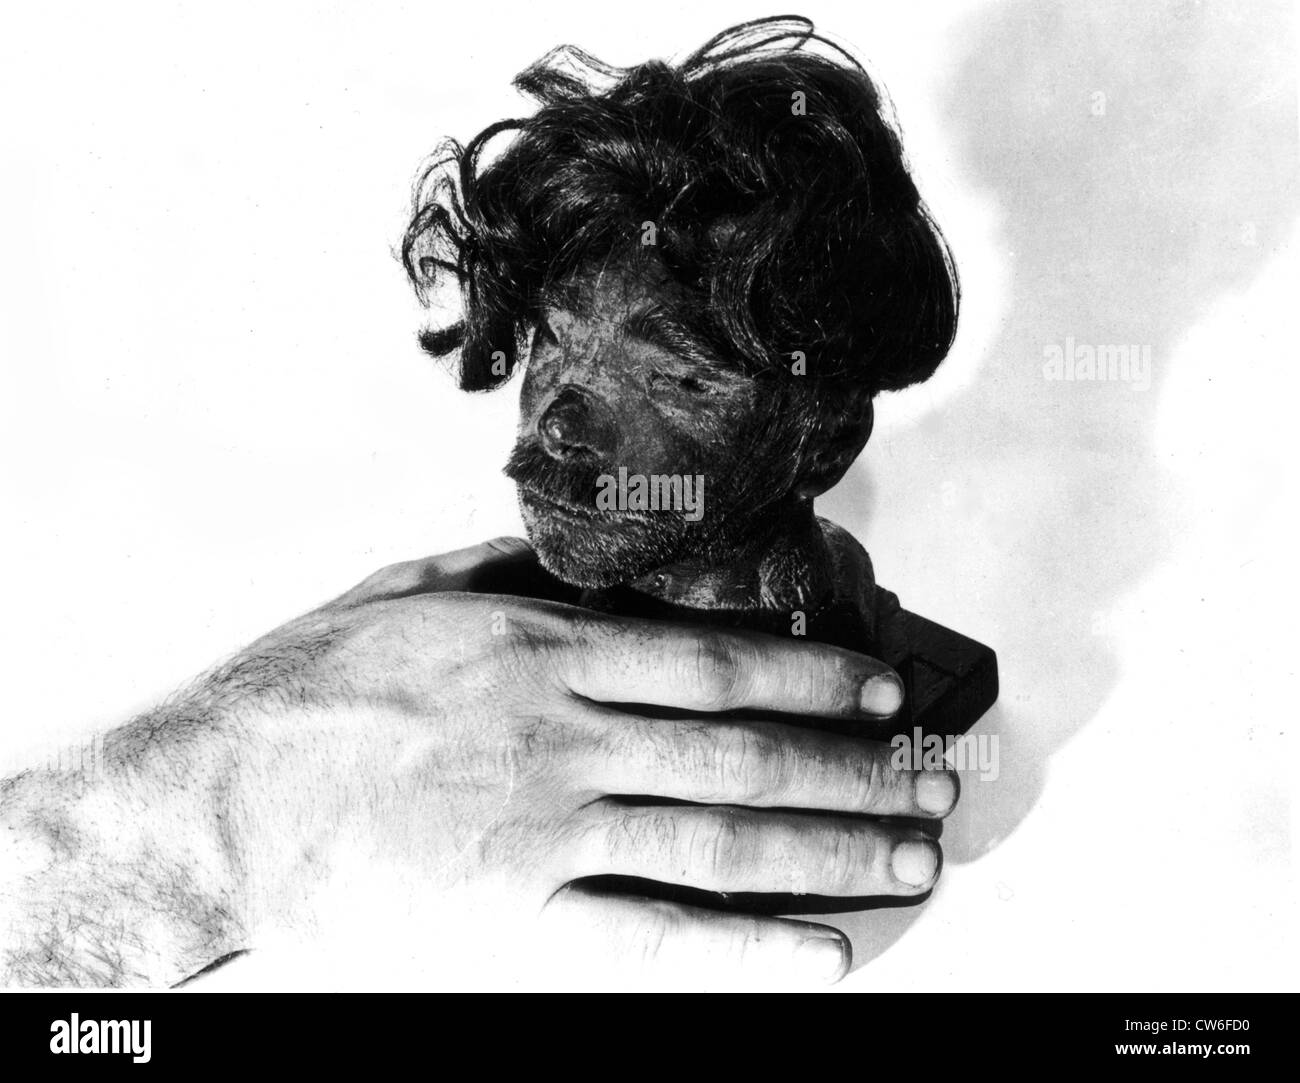 Shrunken head is intriducted an Nuremberg International Tribunal (1945). Stock Photo